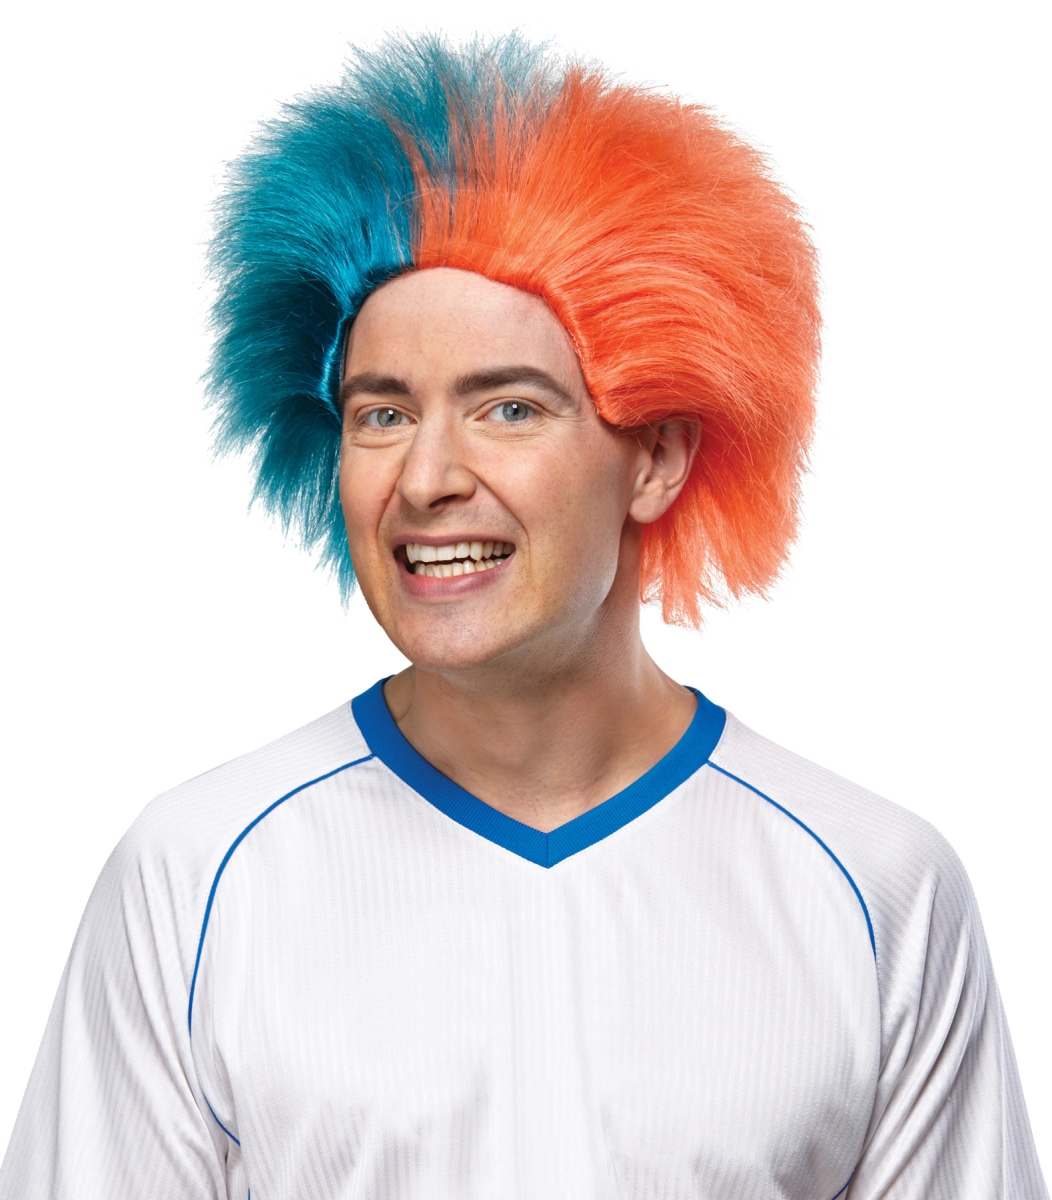 Morris Costumes MR179578 Sports Fun Teal Orange Wig Costume